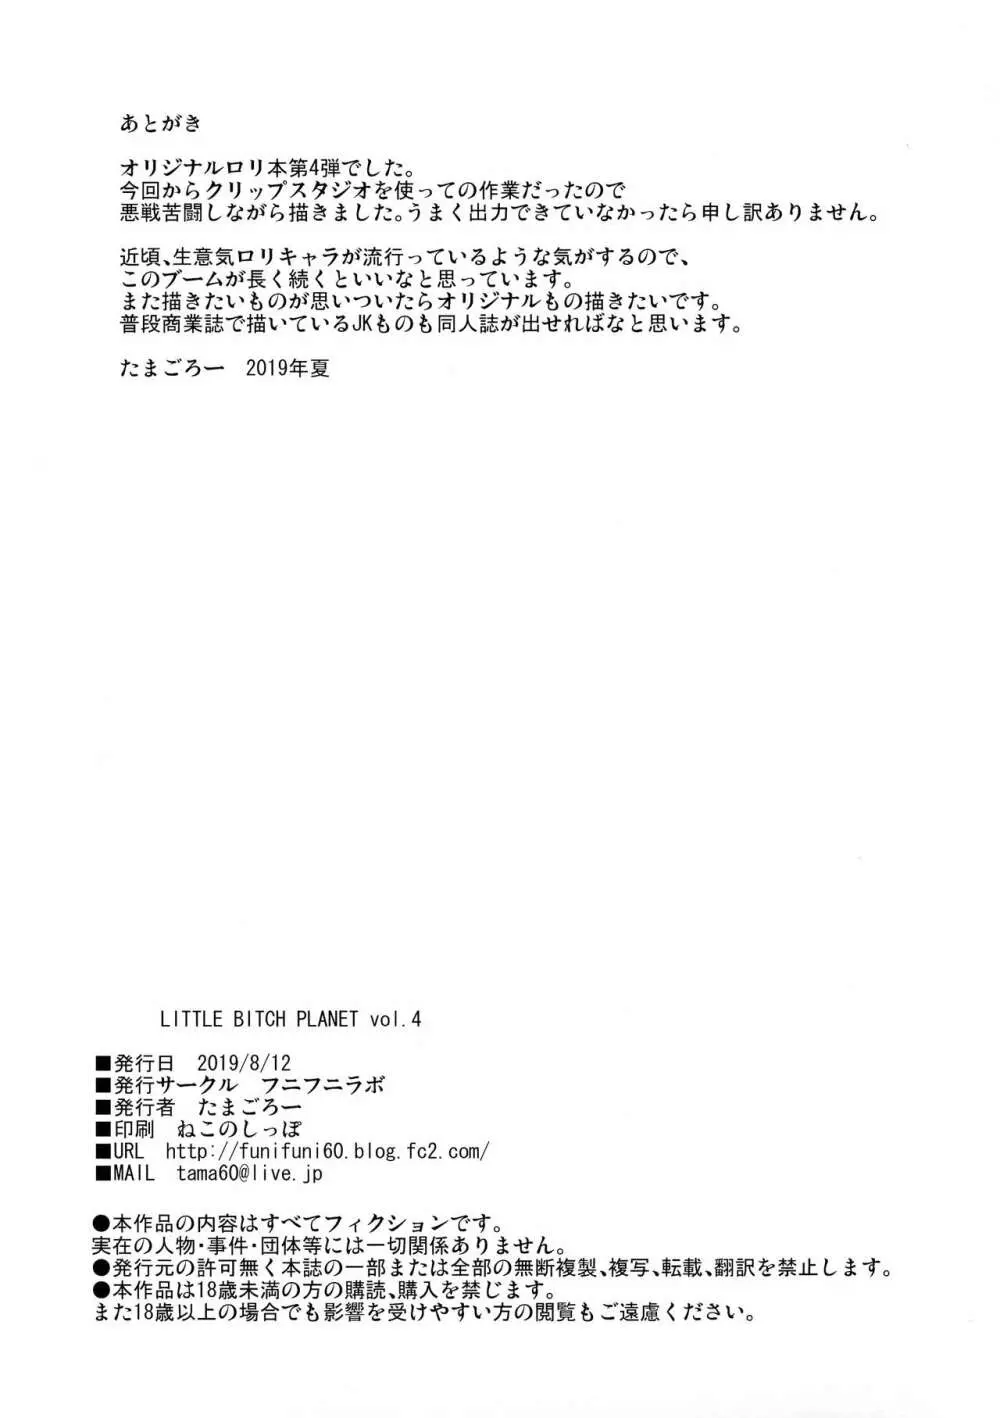 LittleBitchPlanet vol.4 28ページ